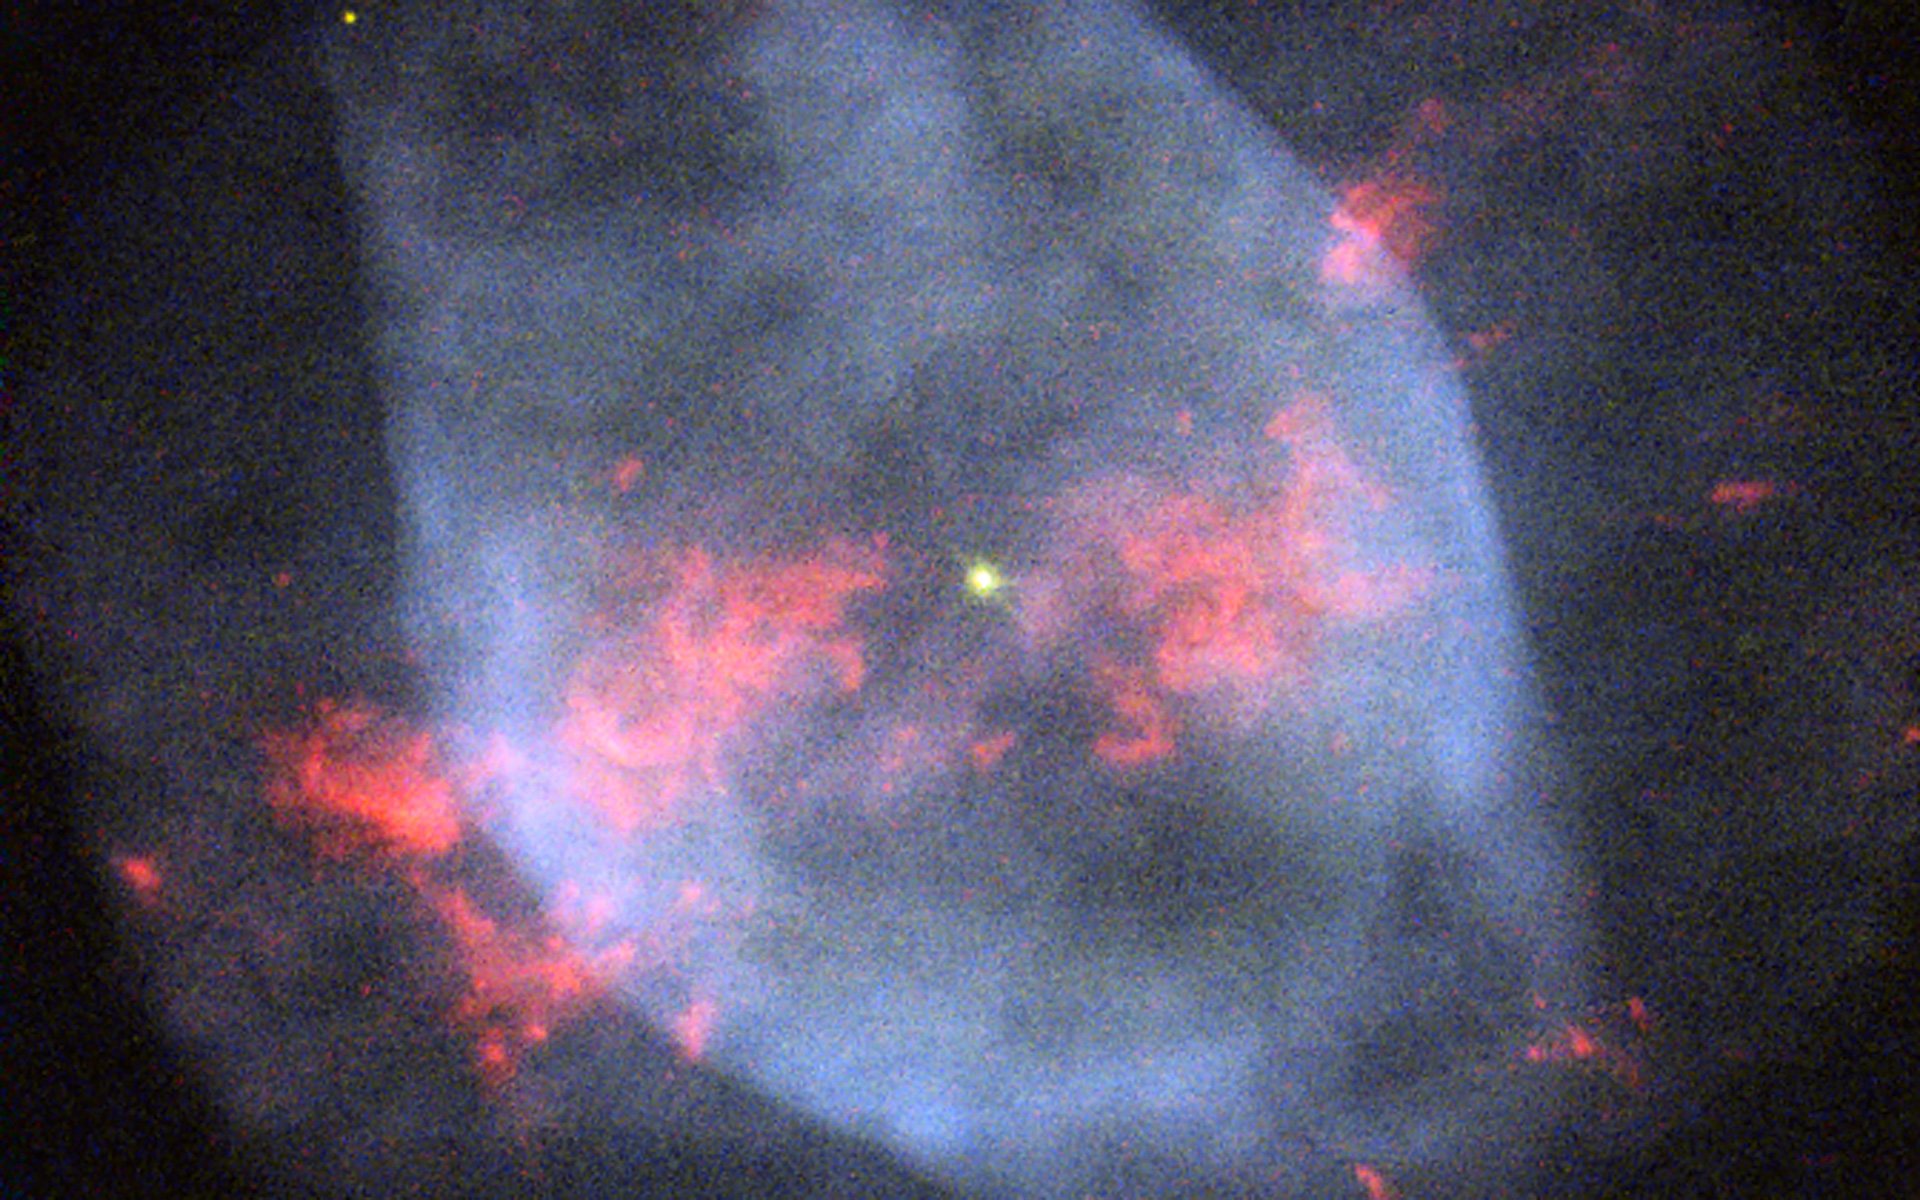 http://www.spacetelescope.org/static/archives/images/wallpaper4/potw1250a.jpg